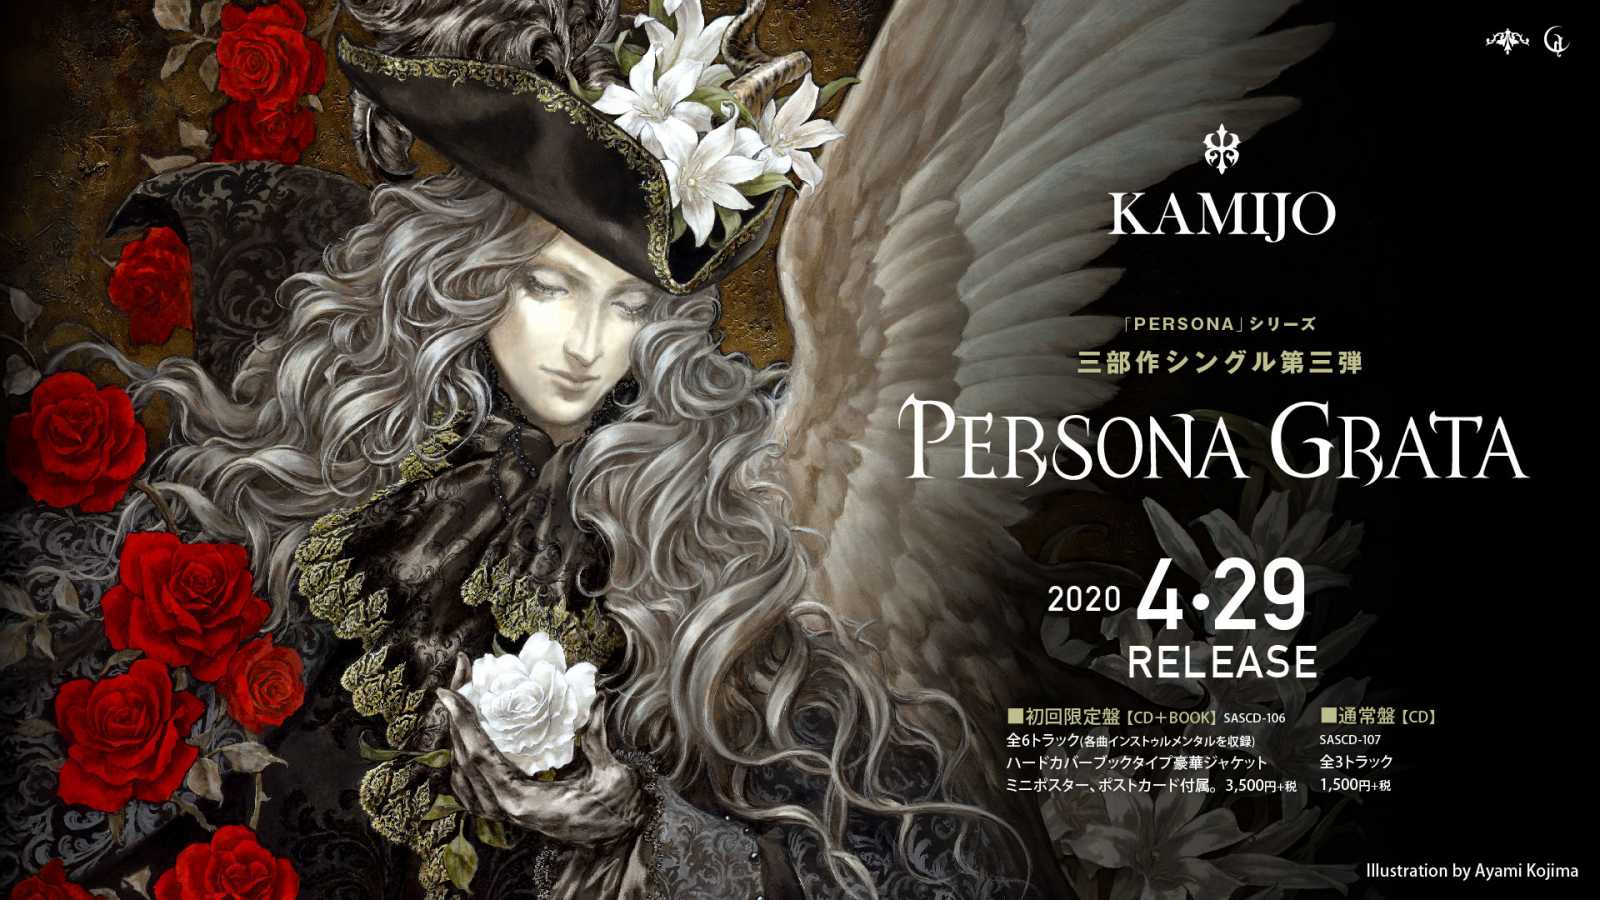 Novo single de KAMIJO © CHATEAU AGENCY CO., Ltd. All rights reserved.